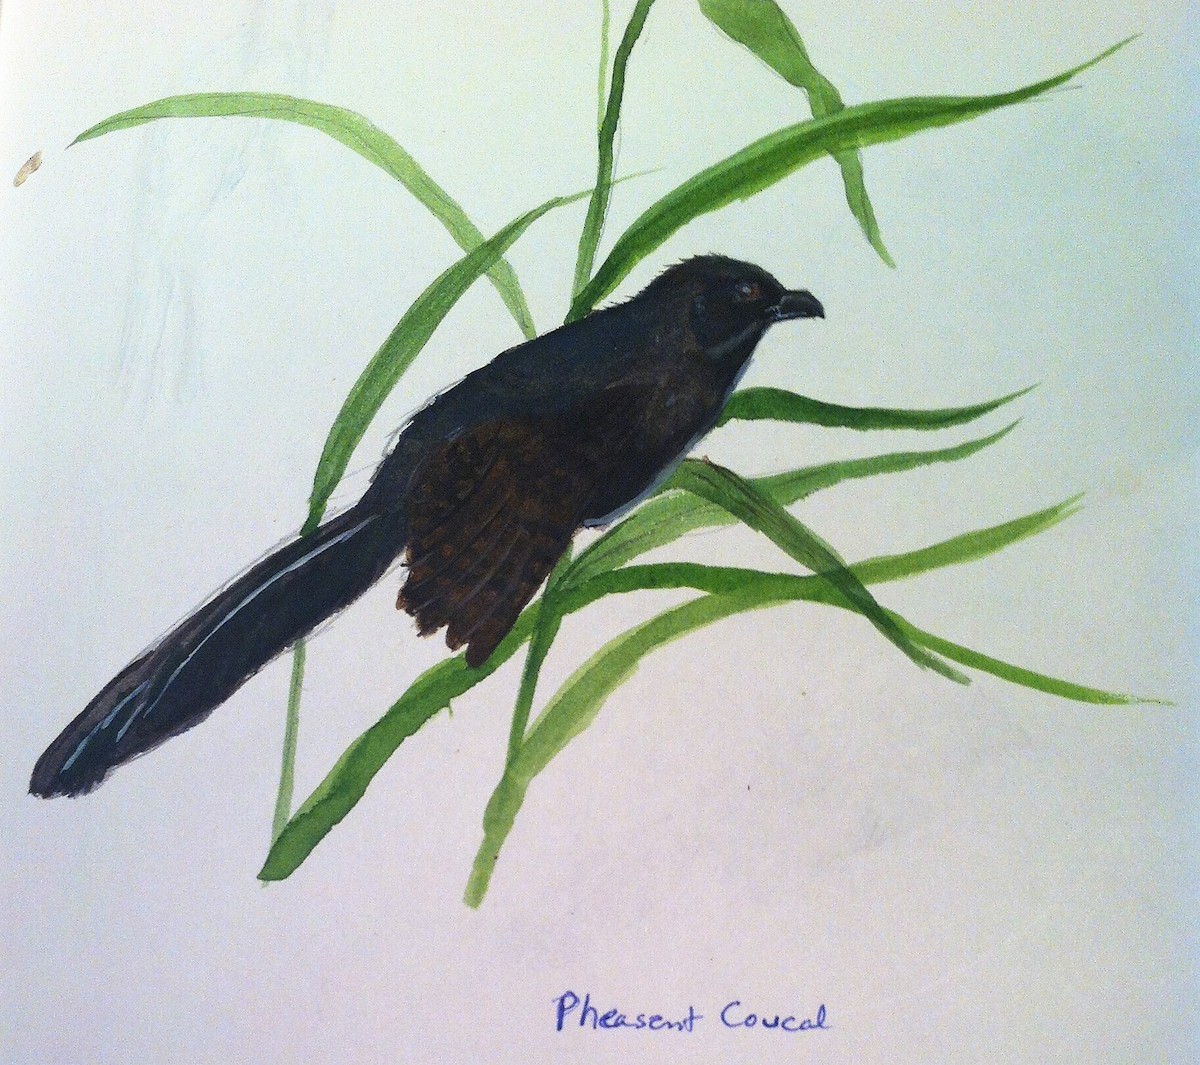 Pheasant Coucal (Pheasant) - David Fraser